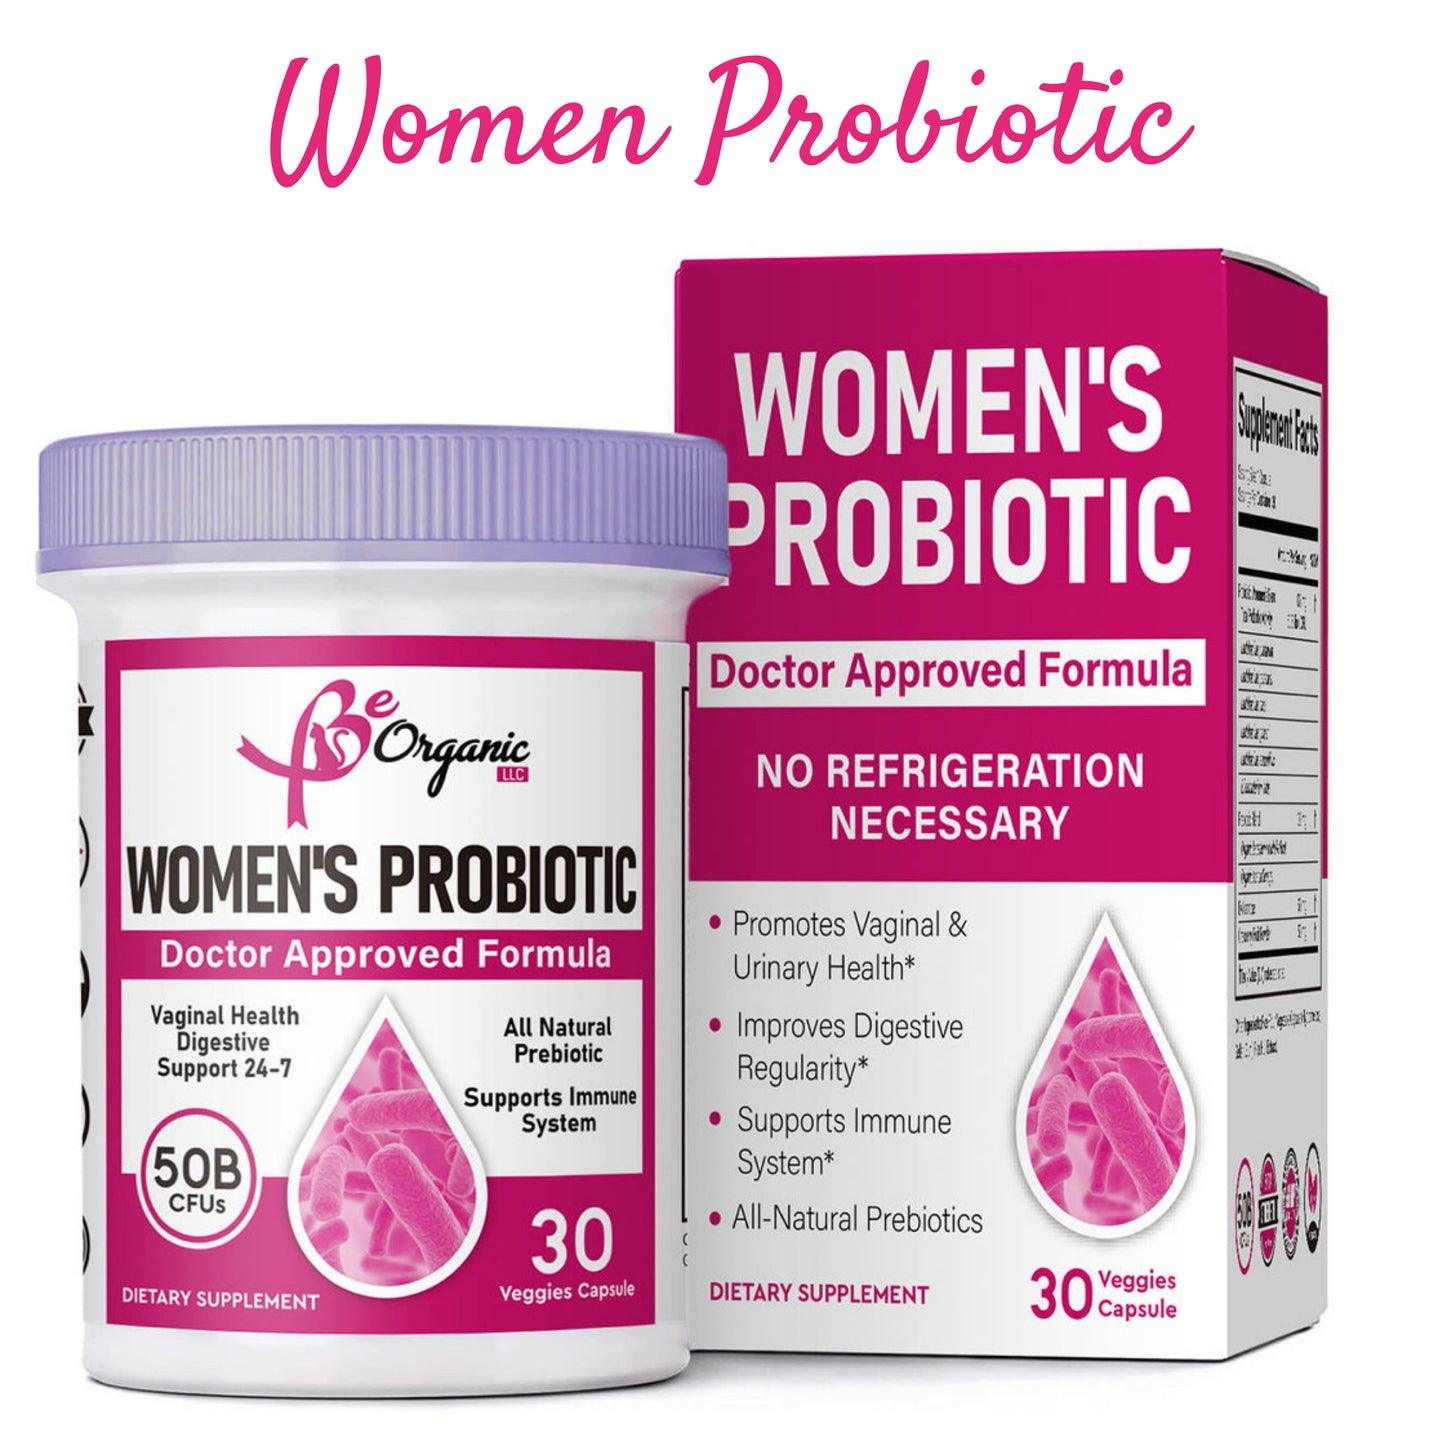 Women Probiotic Support Immune system, Vaginal Health, Improve Digestive irregularity